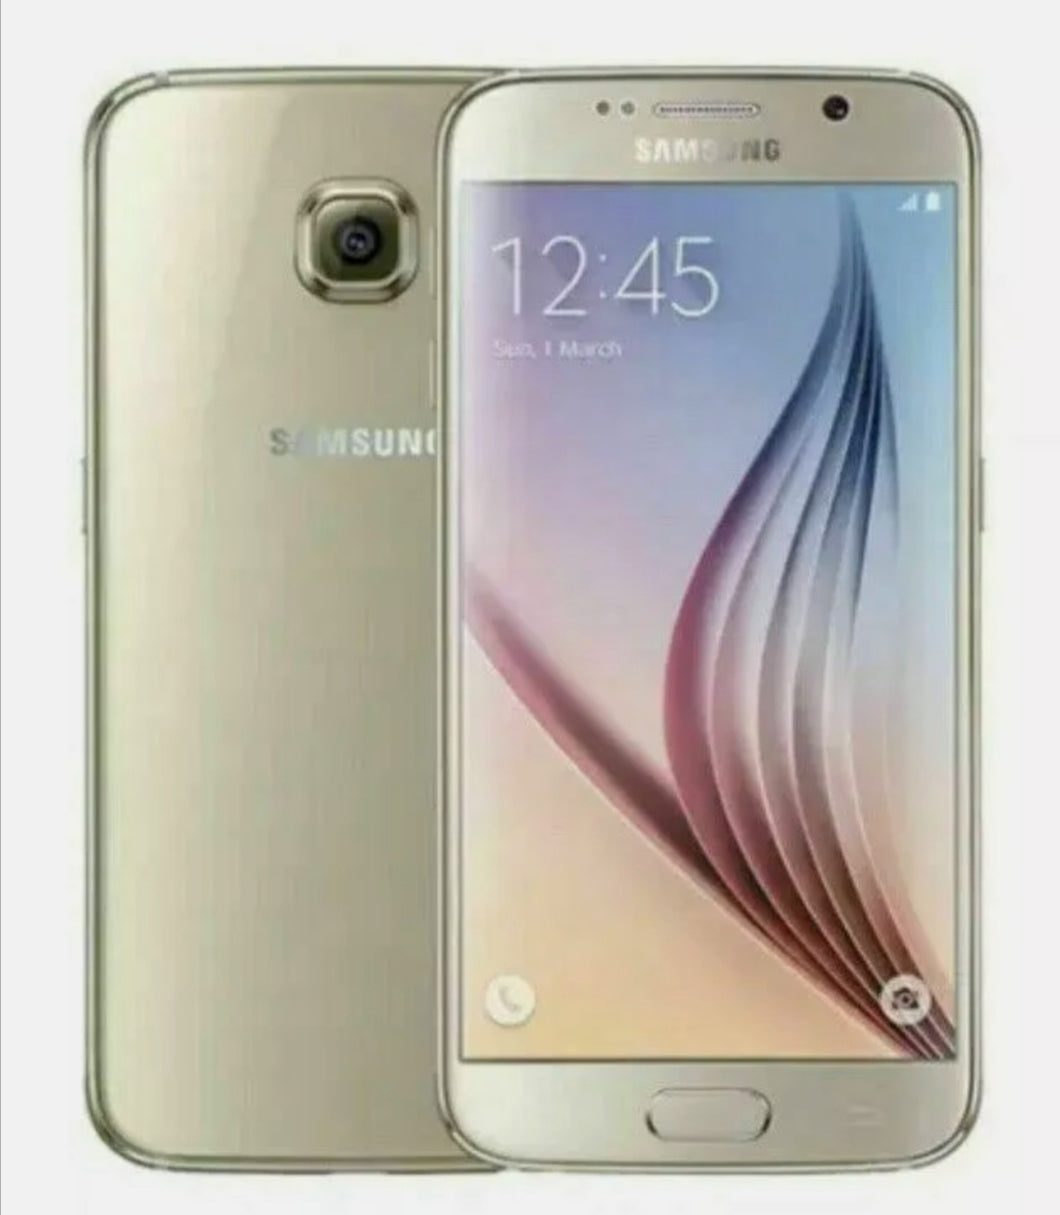 SAMSUNG GALAXY S6 Refurbished G920 32GB - Gold, White or Black - Unlocked - Smartphone Mobile Phone